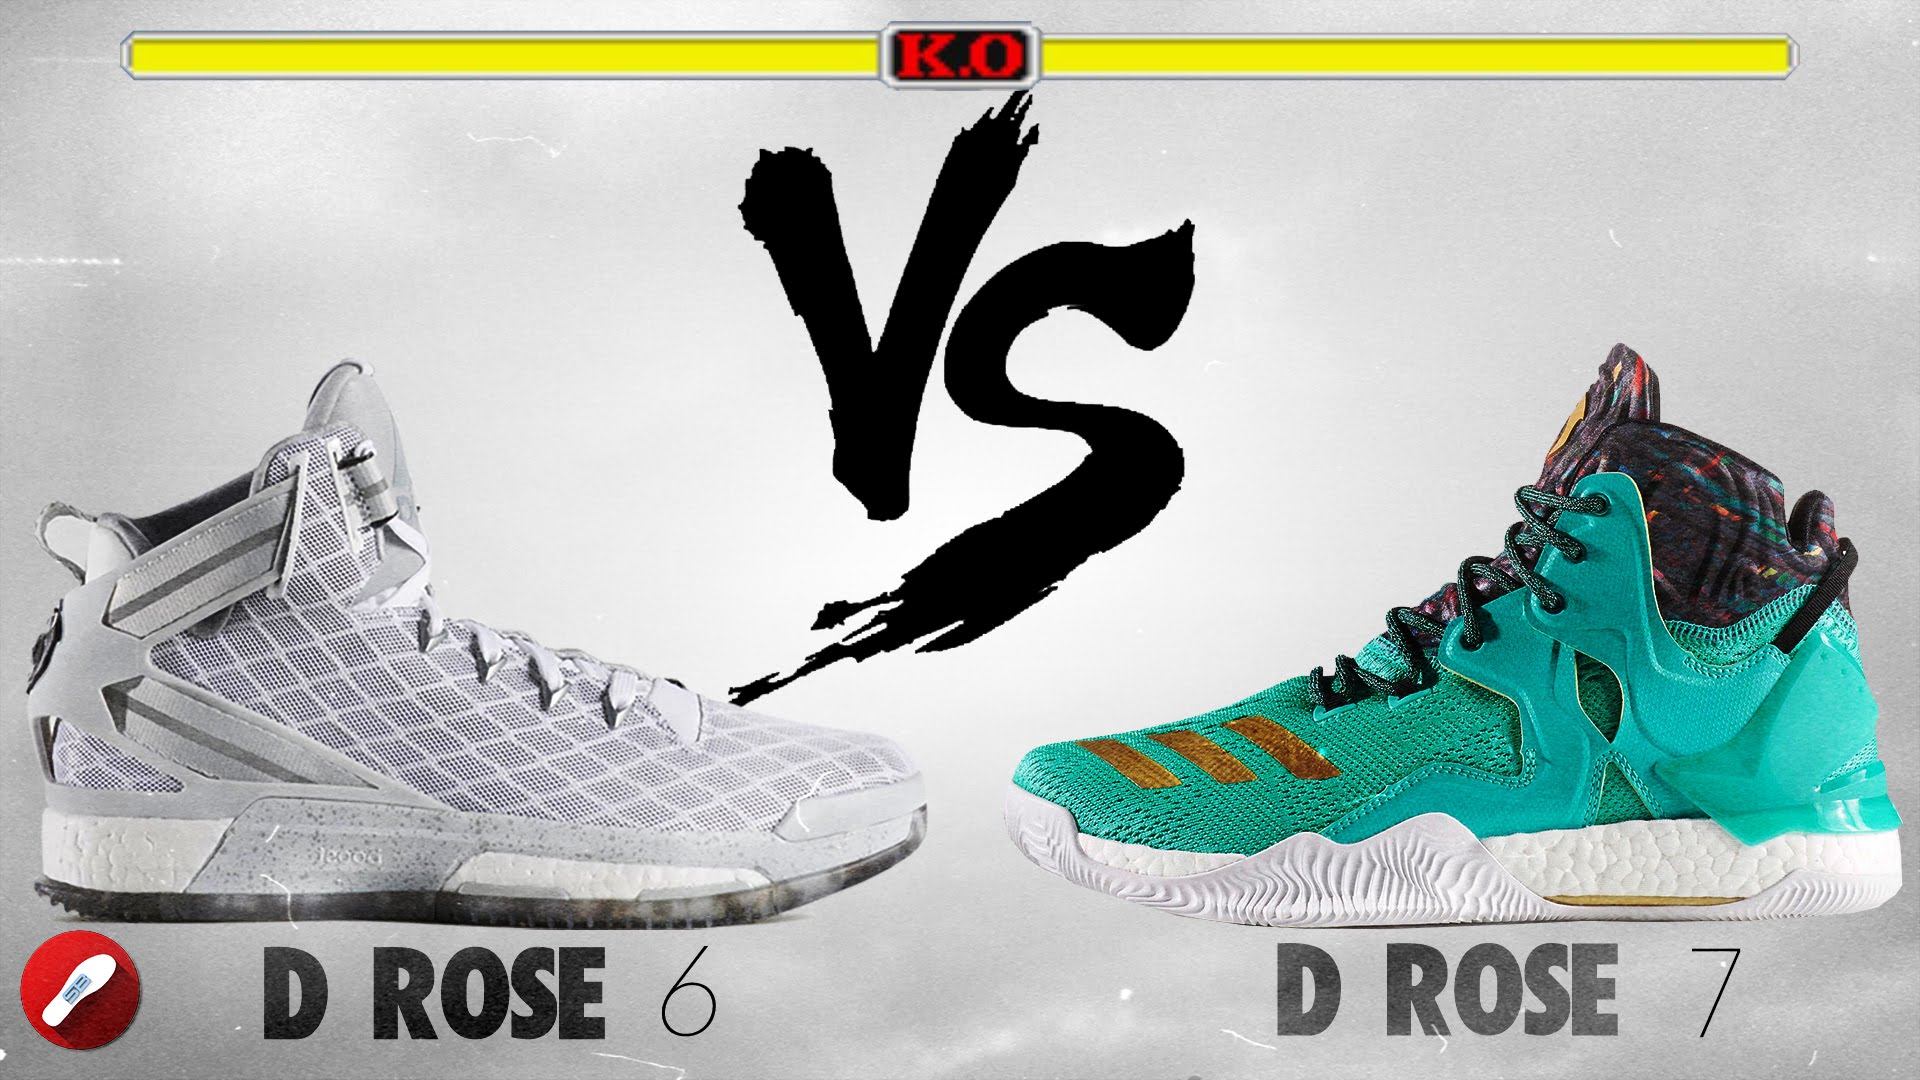 Adidas D Rose 6 vs Adidas D Rose 7! - YouTube